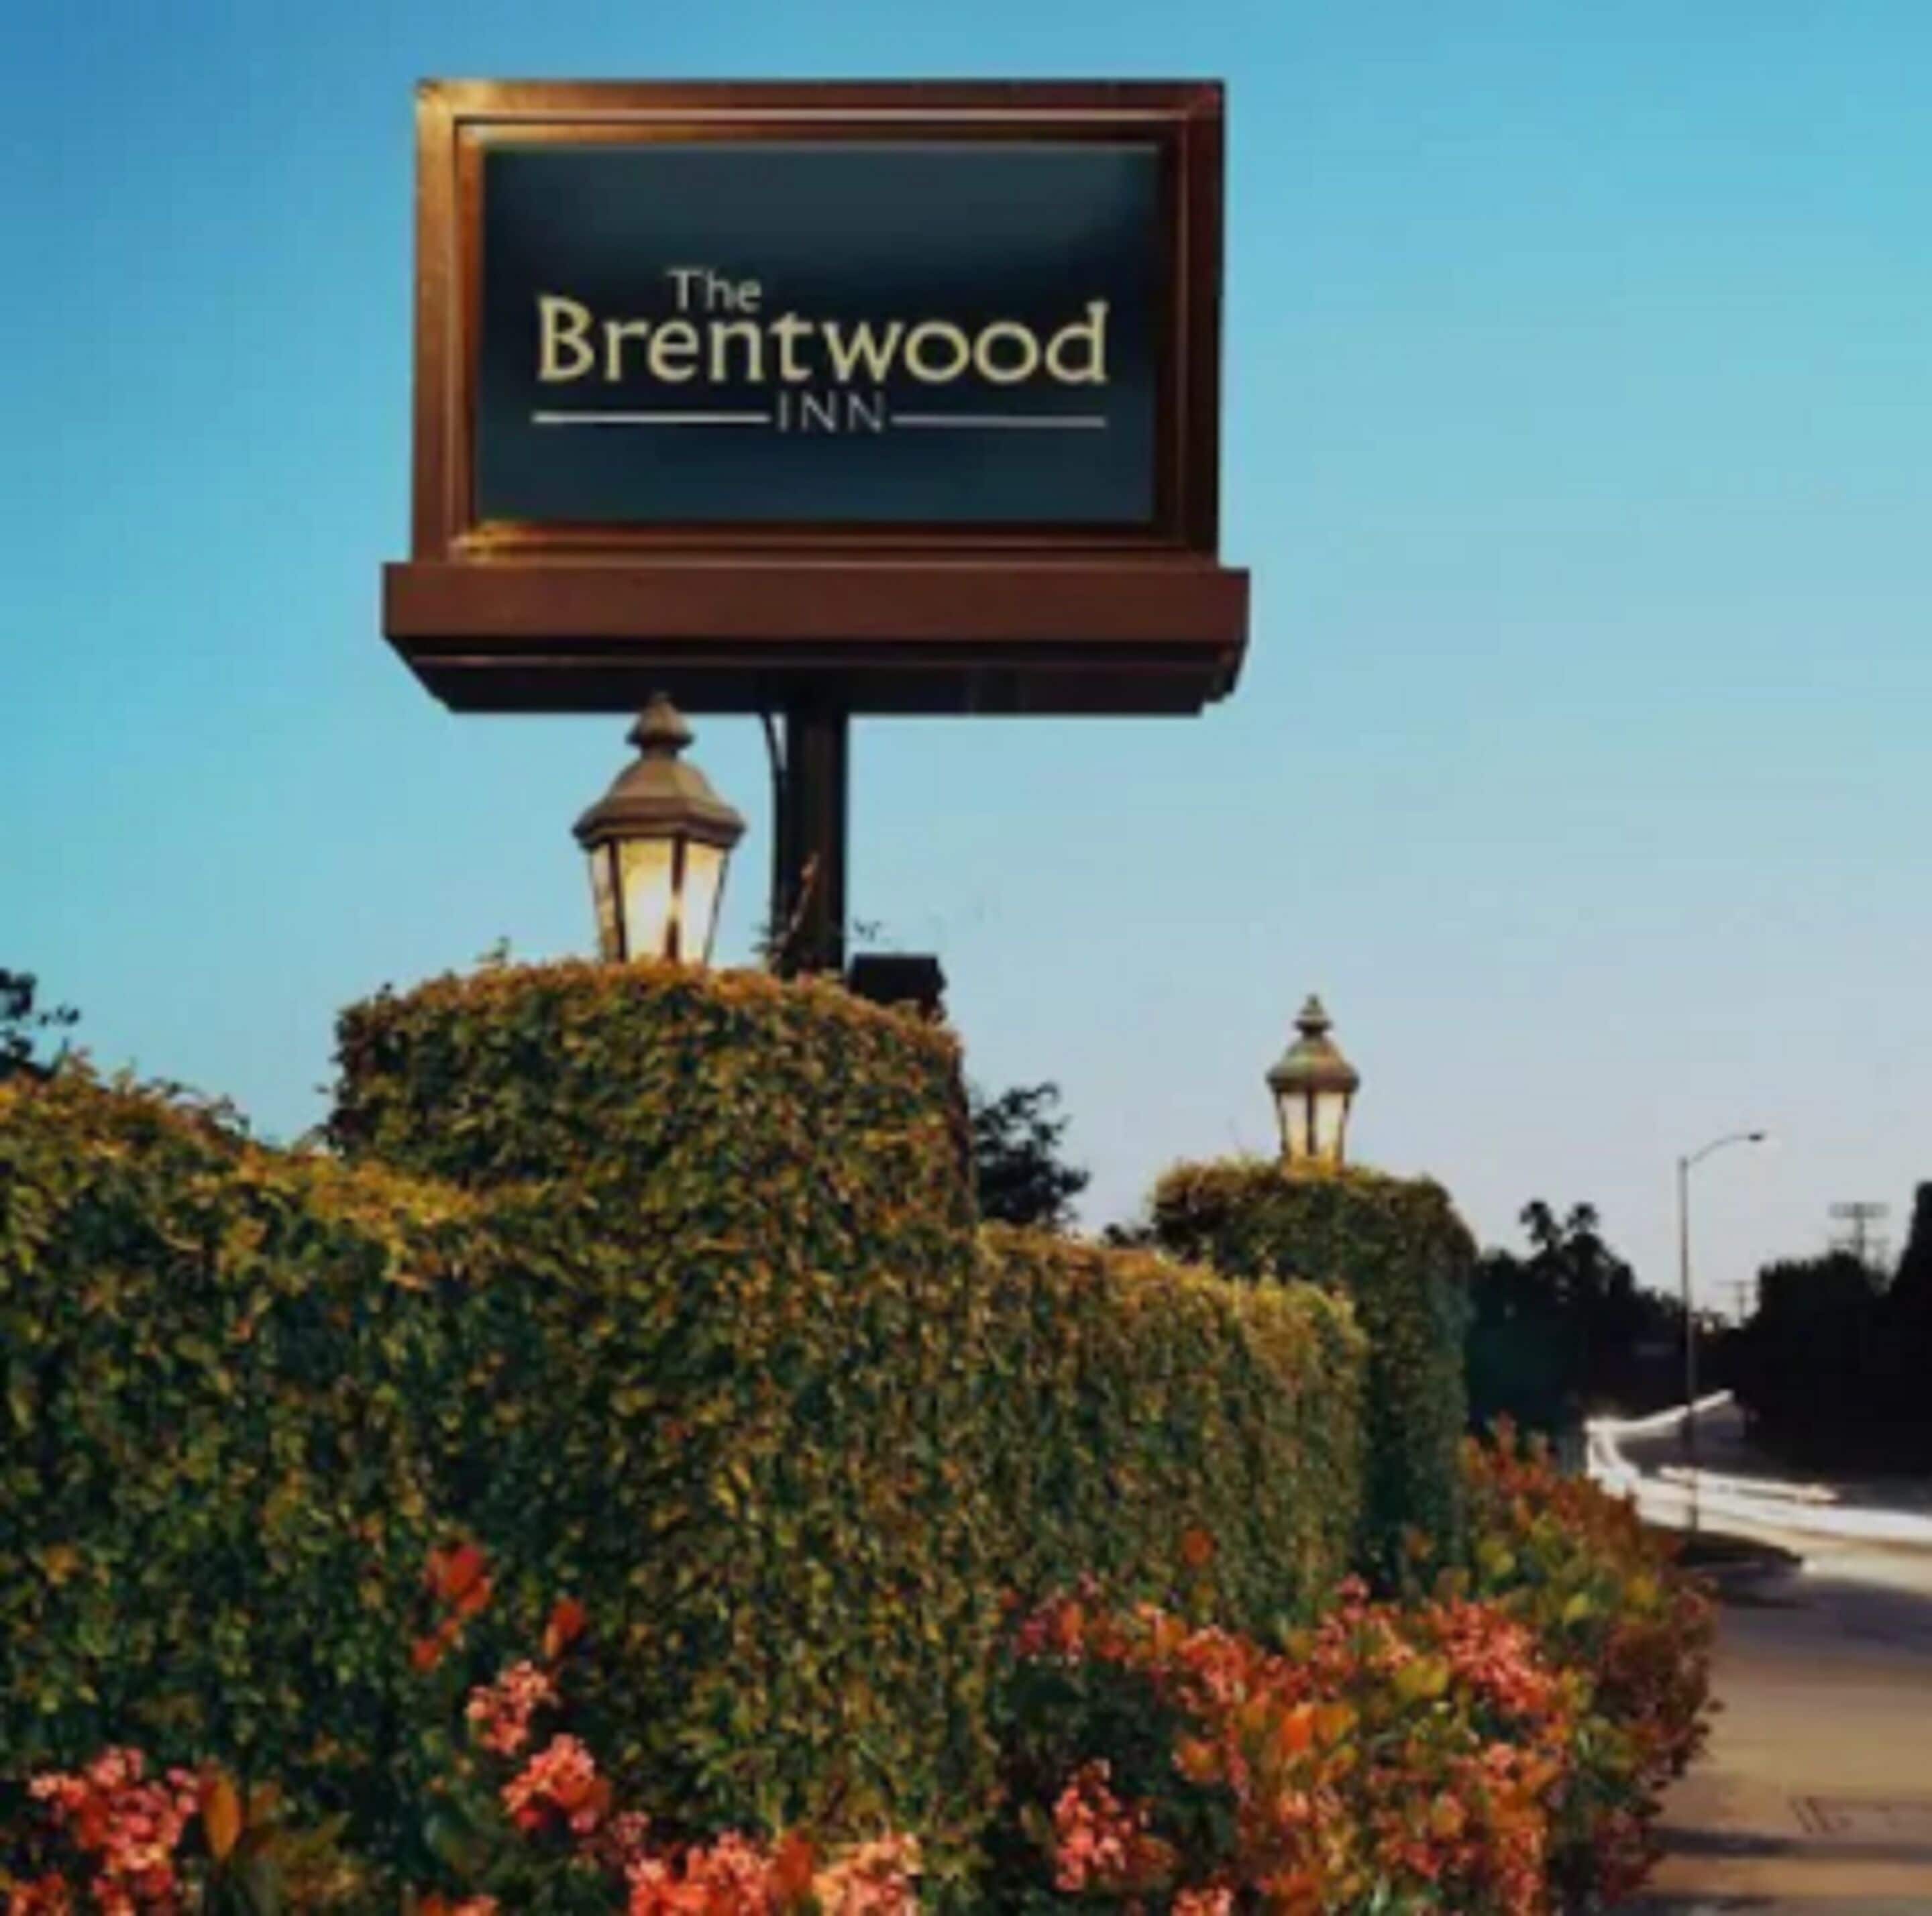 The Brentwood Inn